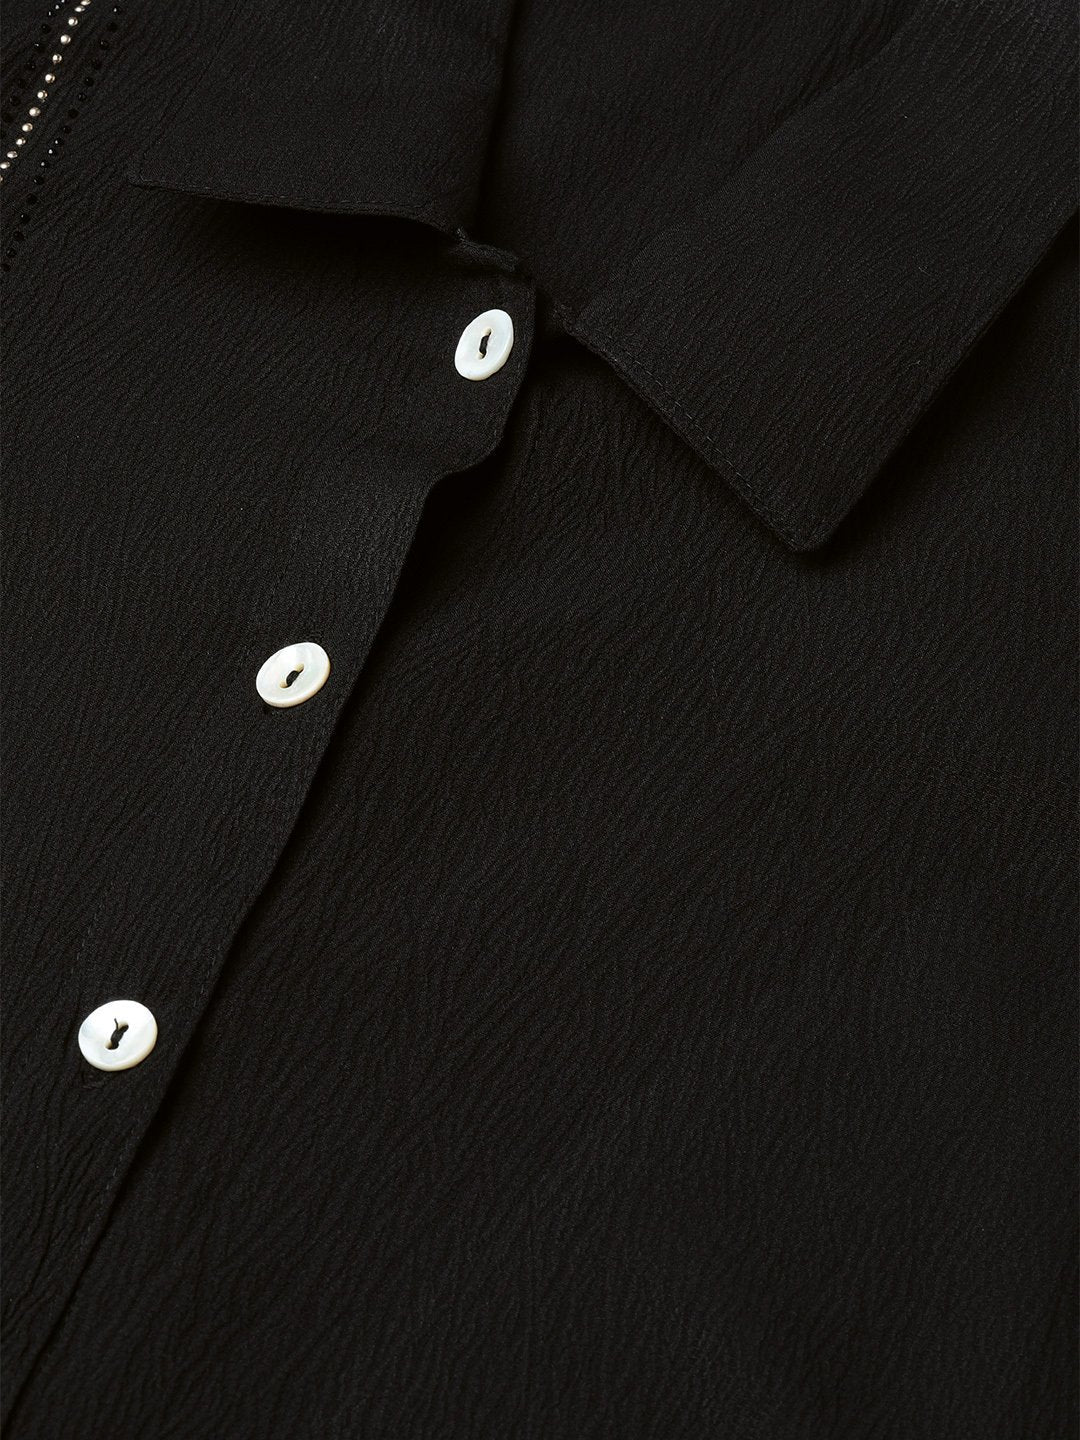 Women's Black Regular Fit Crinkled Effect Casual Shirt - Jompers